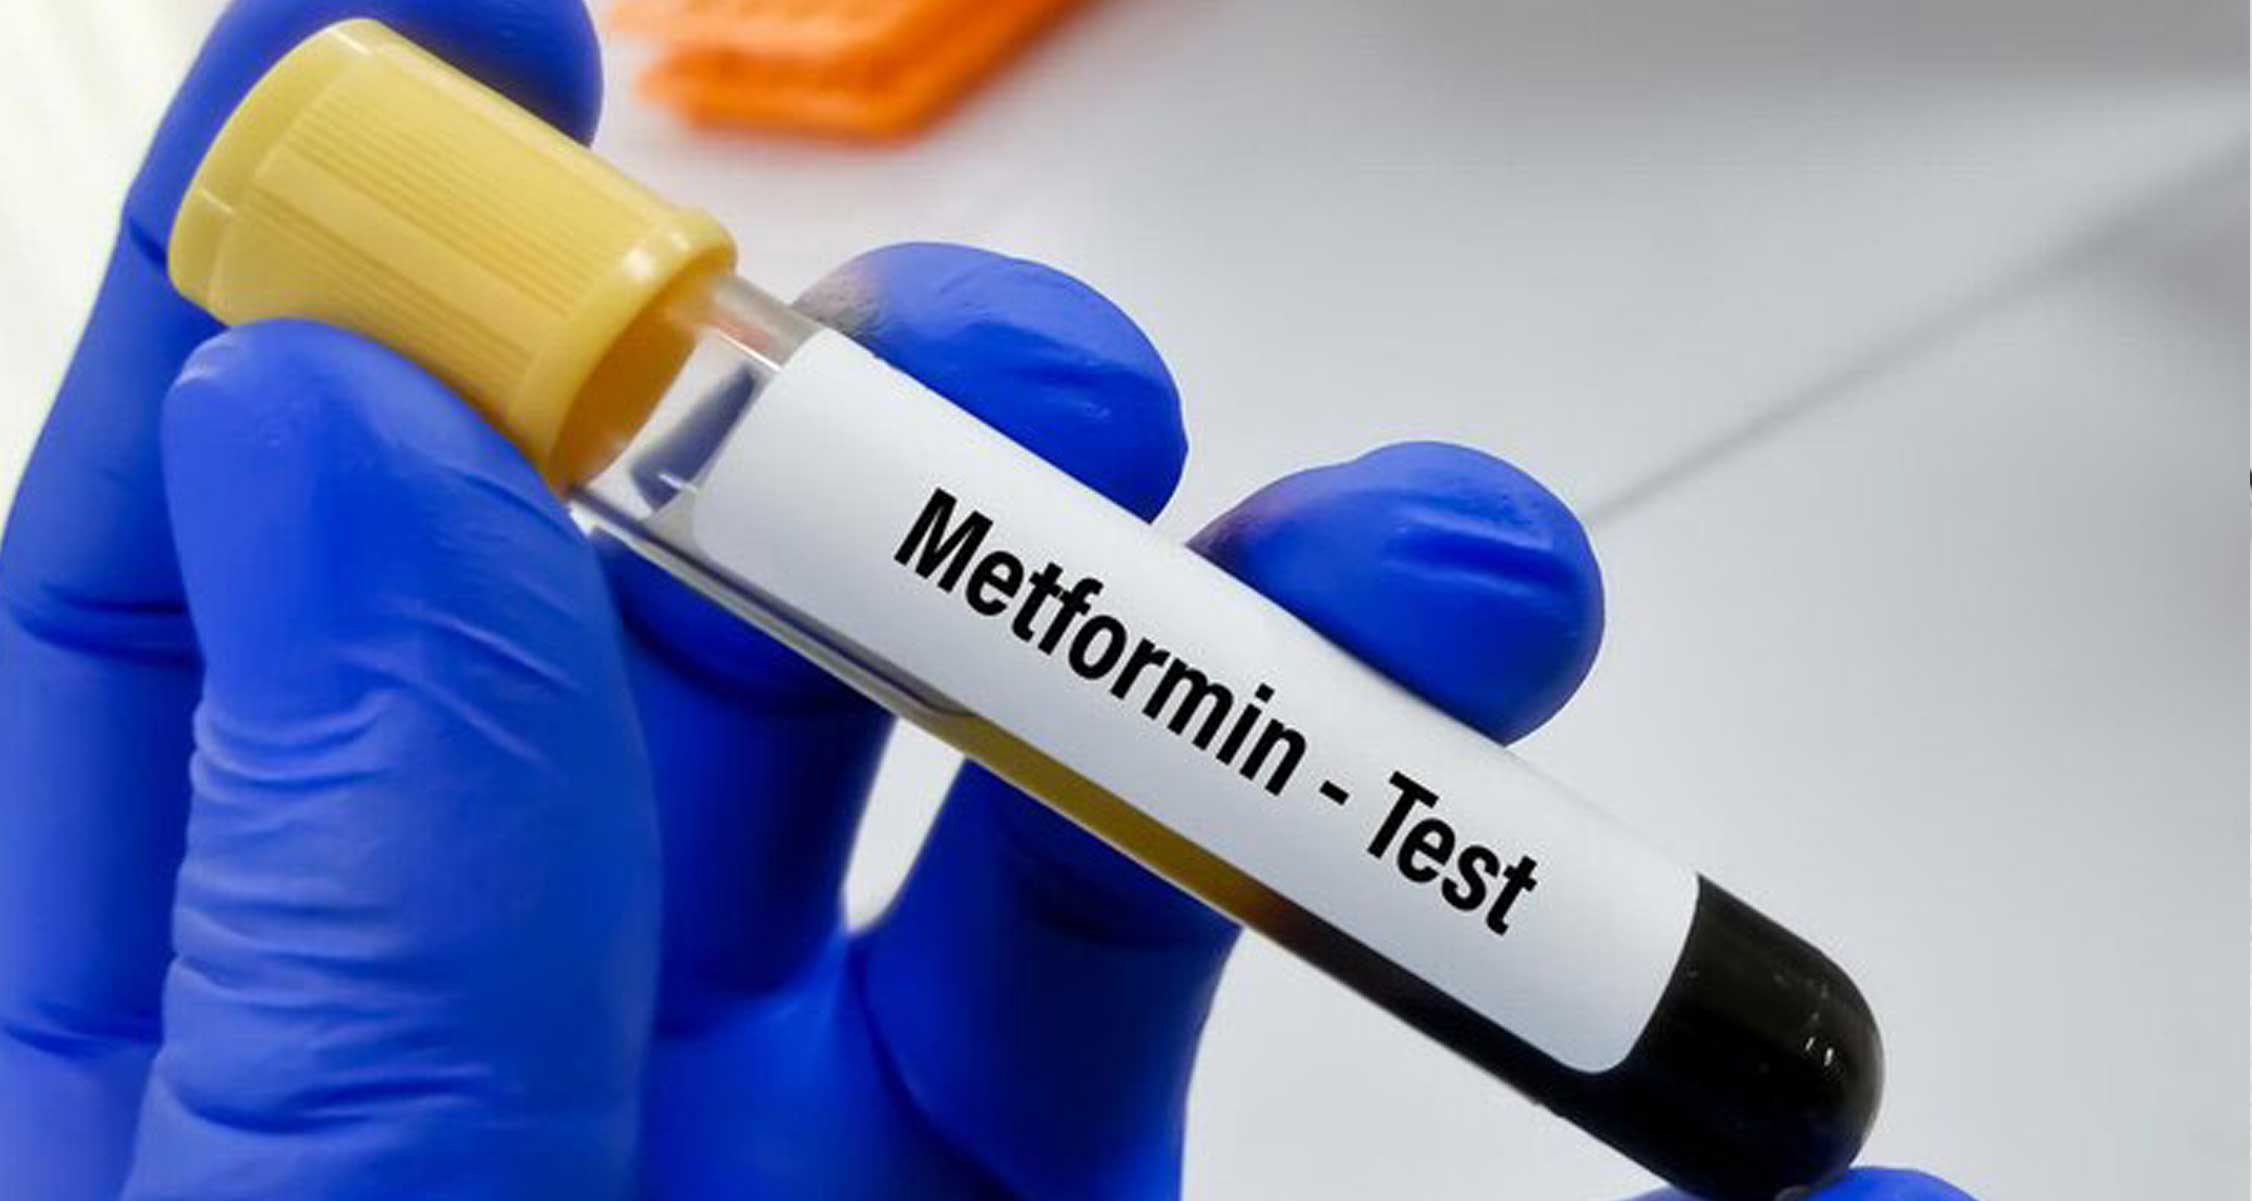 Metformin test